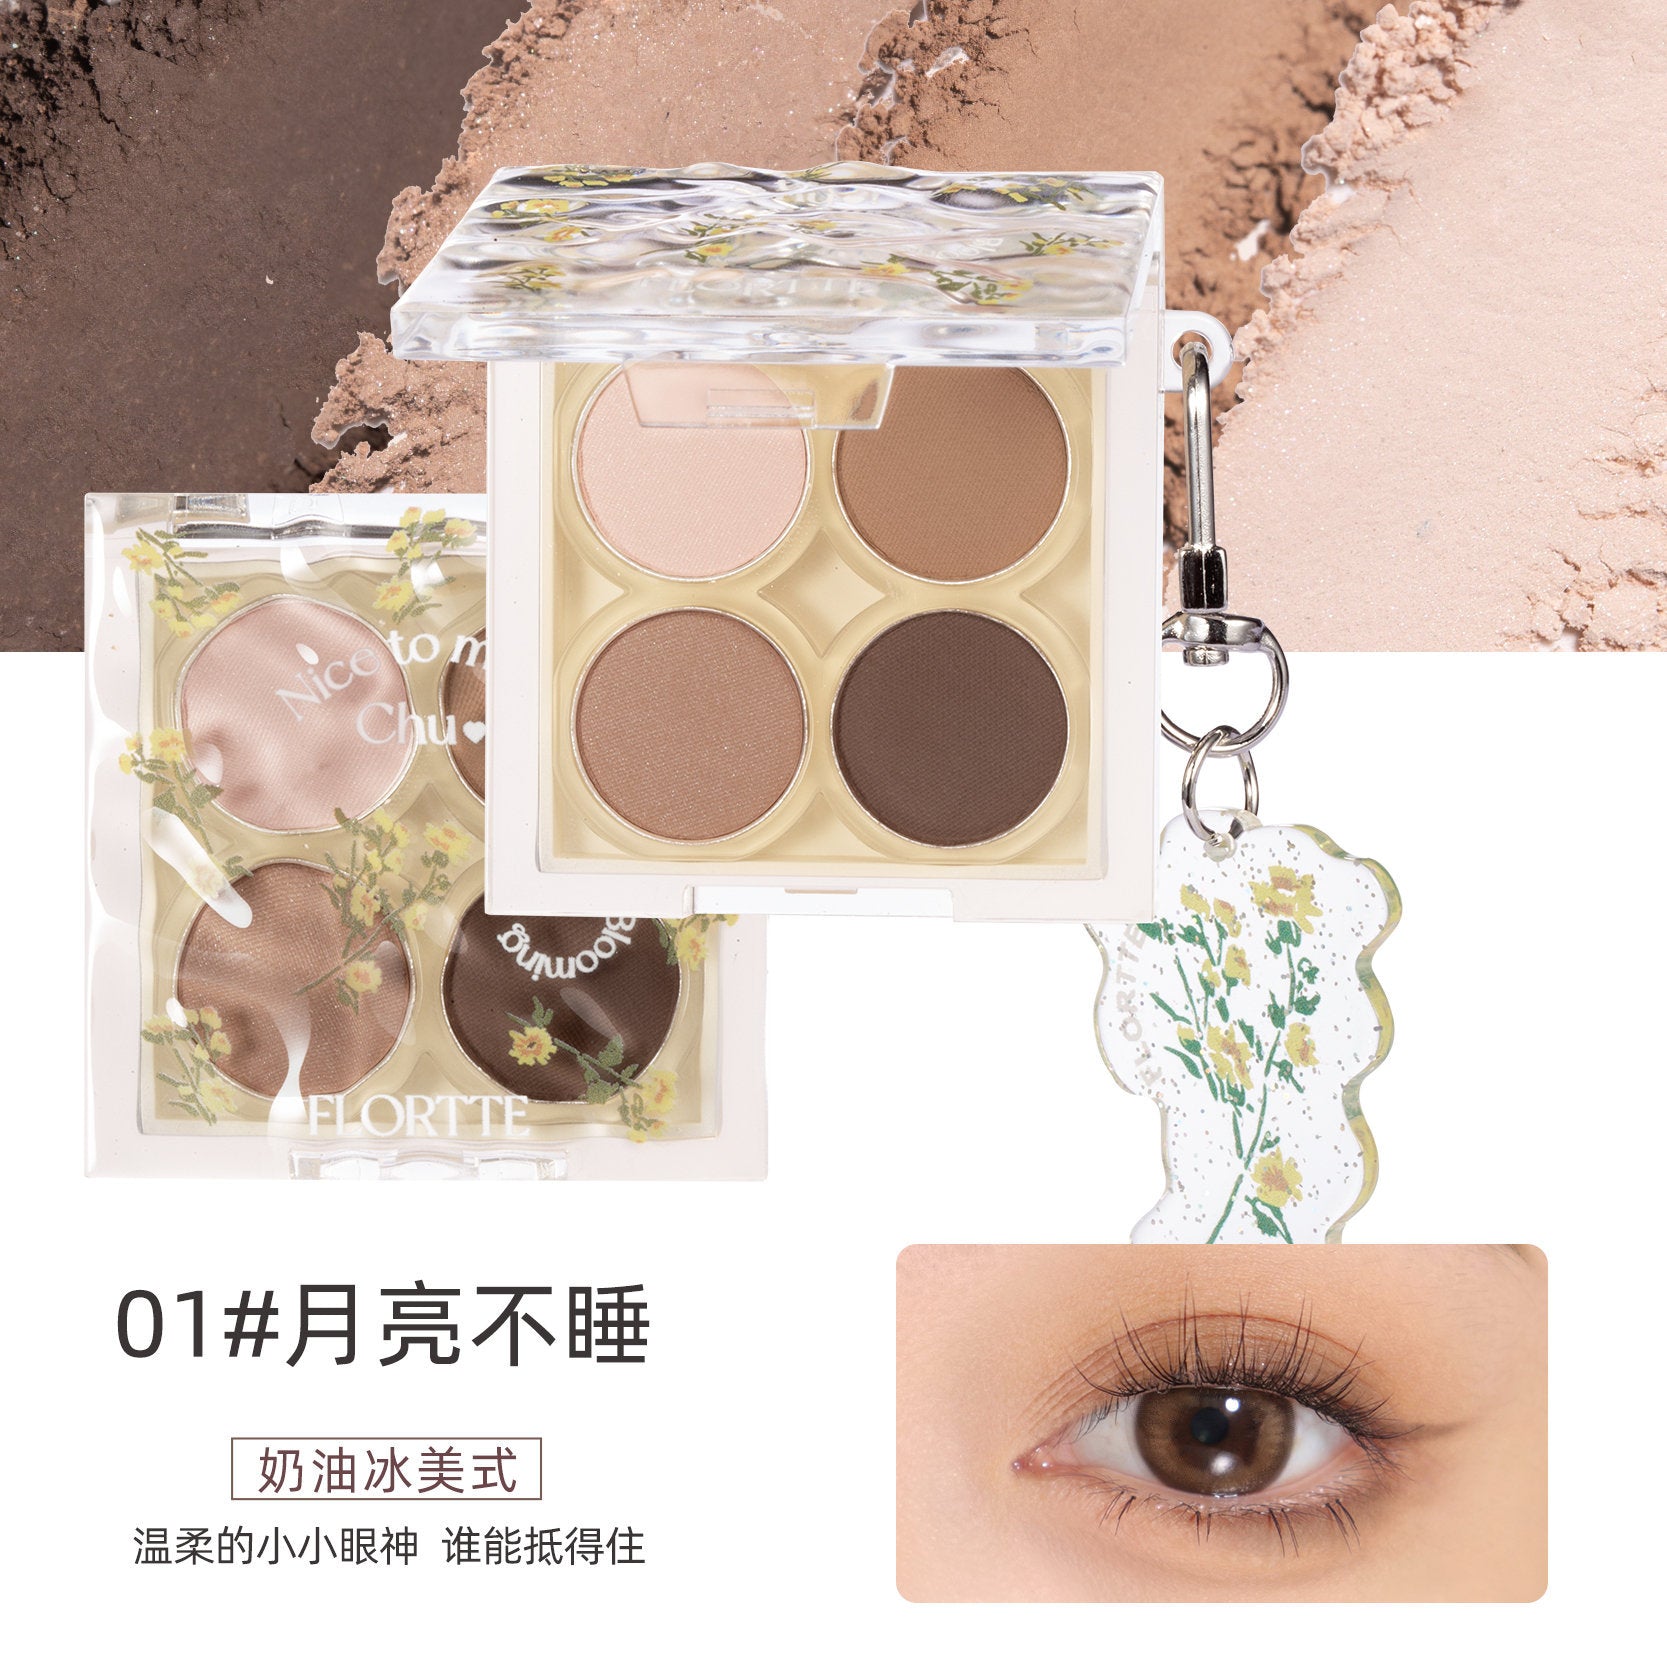 Flortte Nice to Meet Chu 4-color Eyeshadow Palette 花洛莉亚初吻啵啵系列4色眼影盘 4g